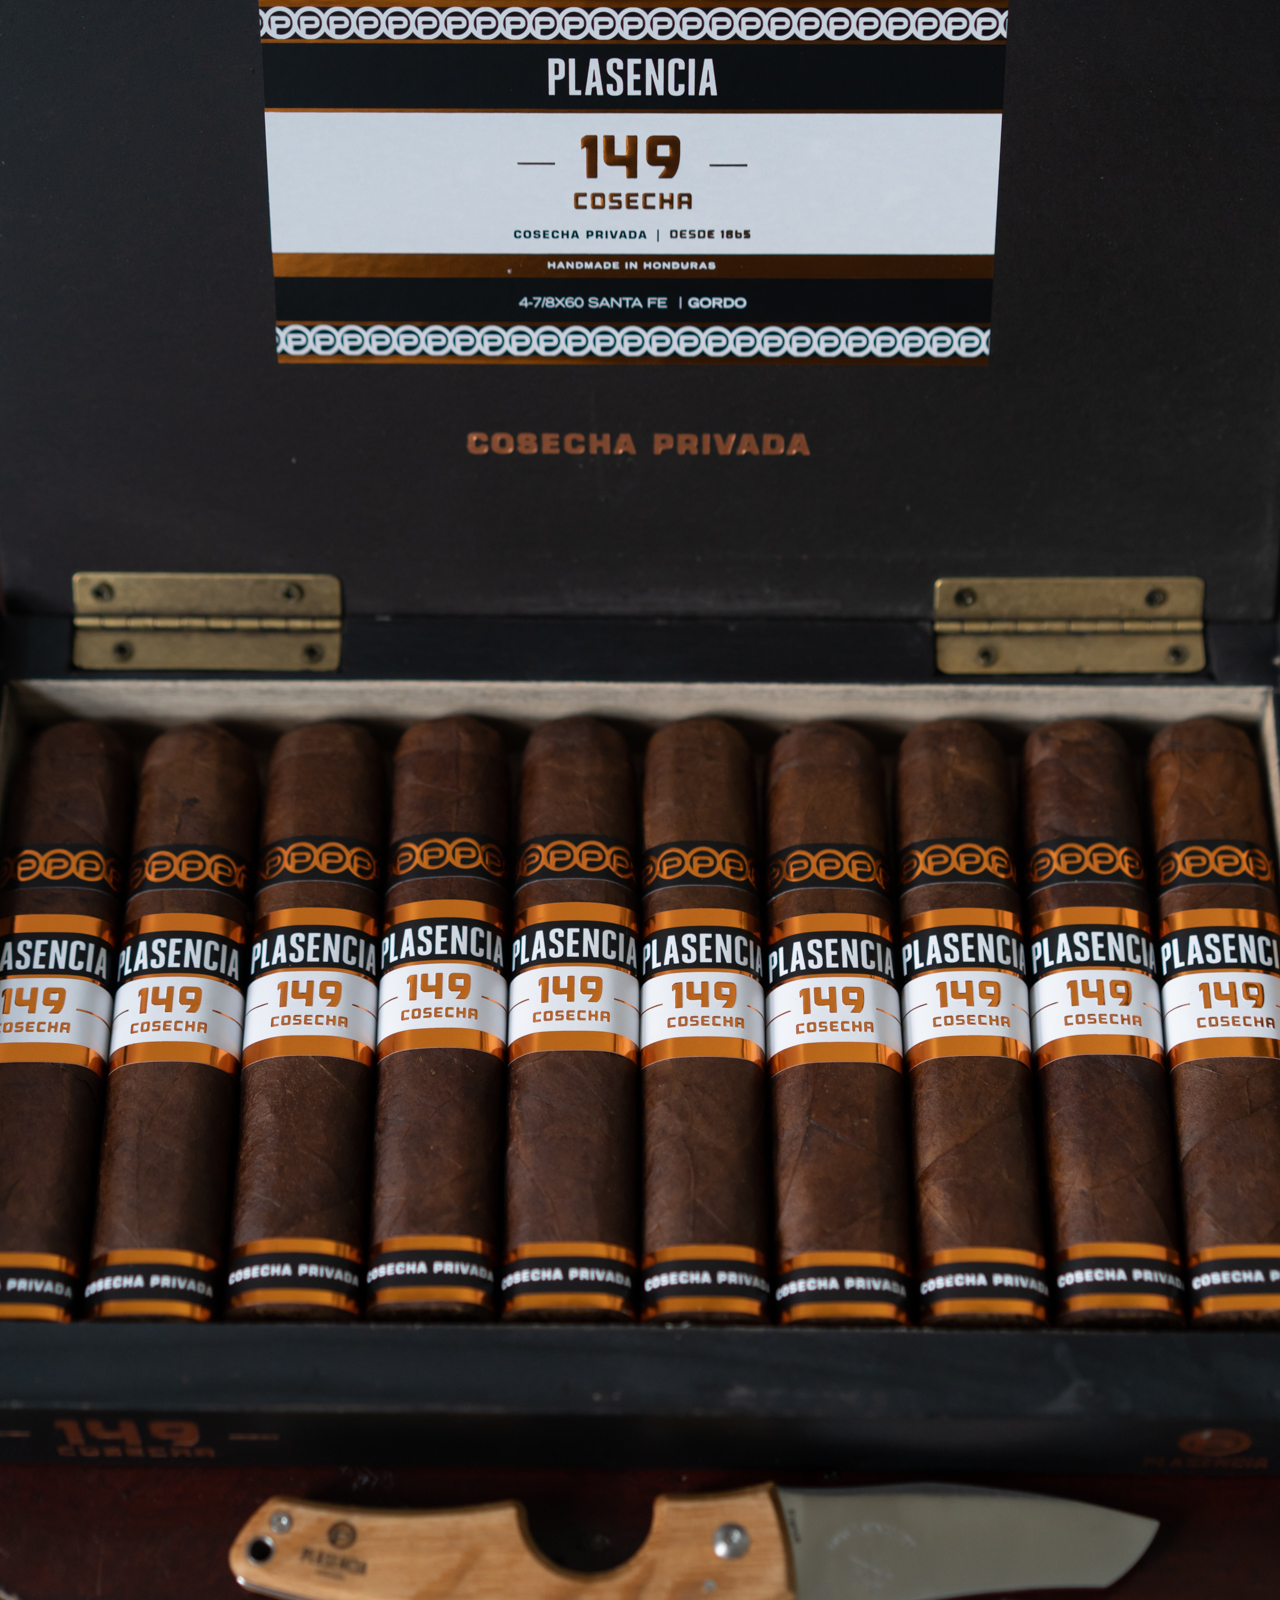 Blind Cigar Review: Plasencia Cosecha 149 Gordito